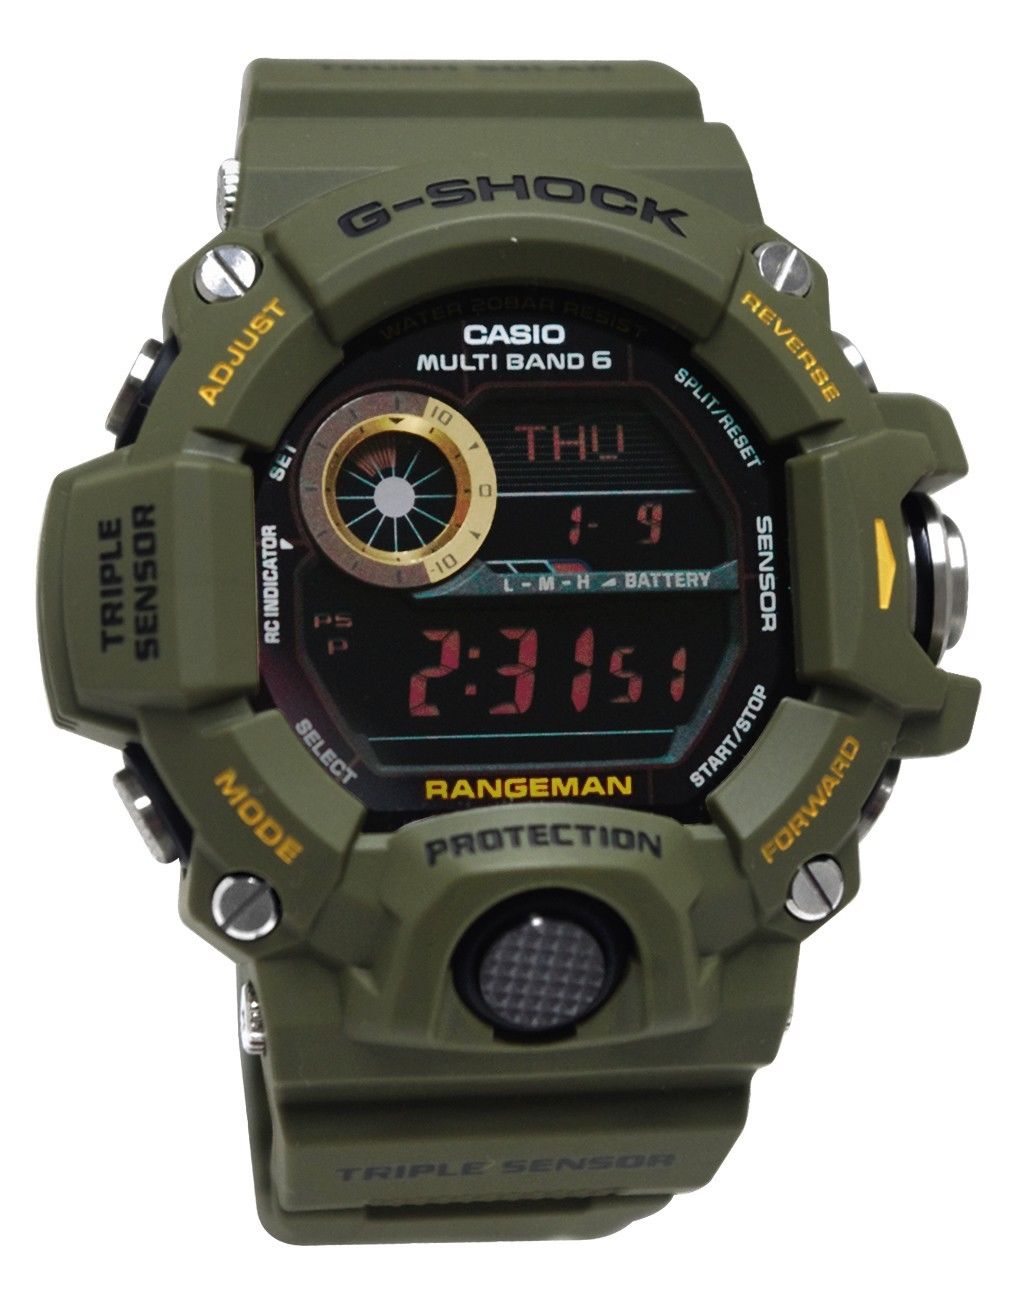 x GShock 54mm watch